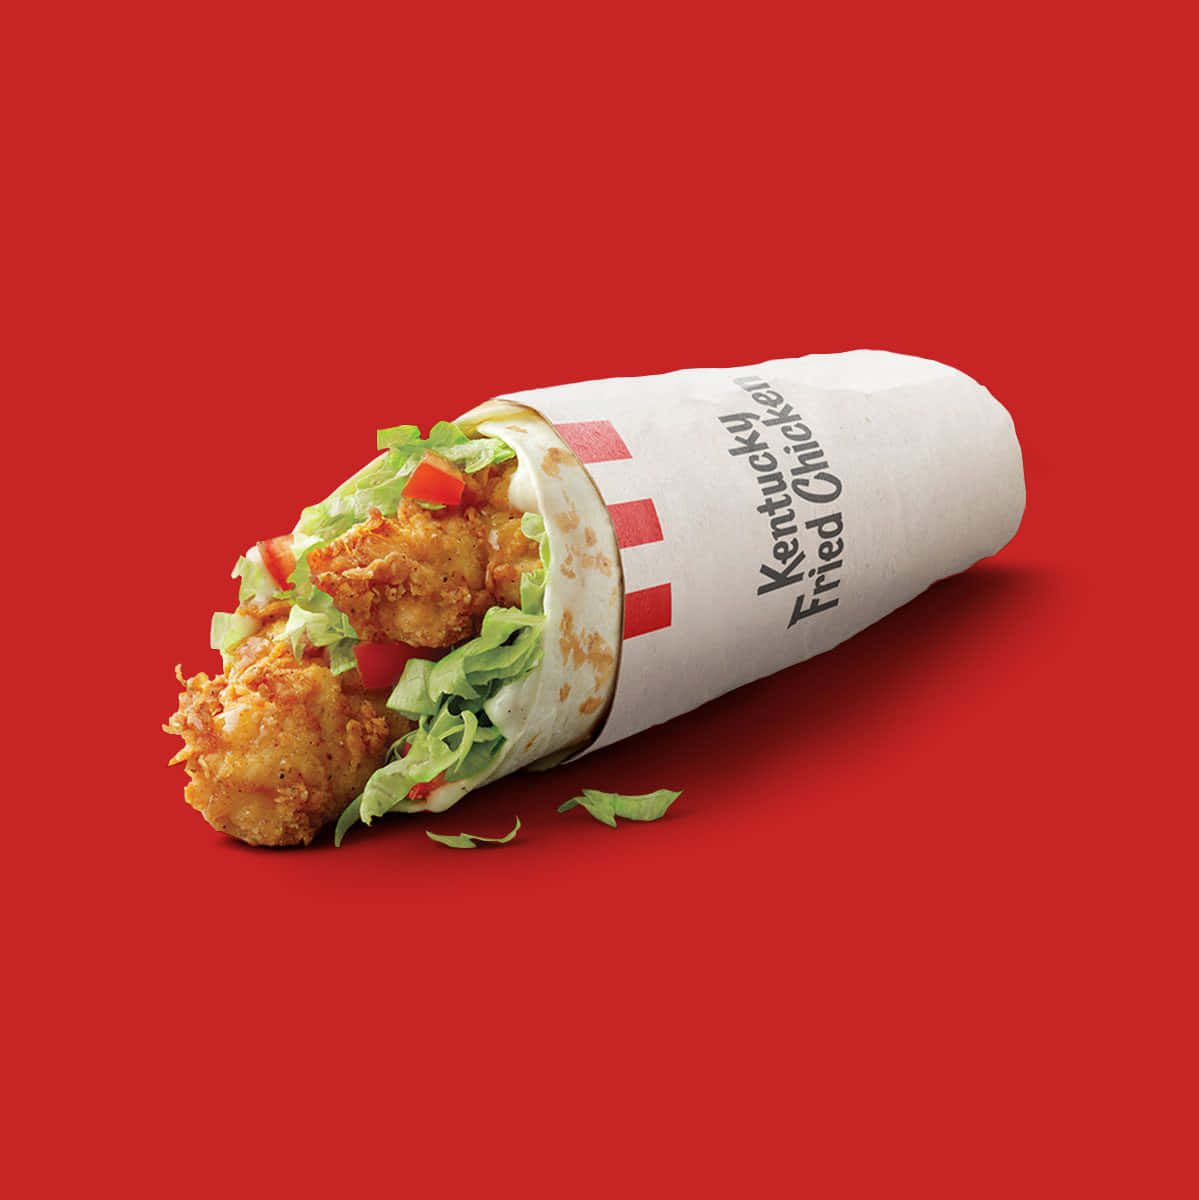 Enjoy your favorite KFC meals today!